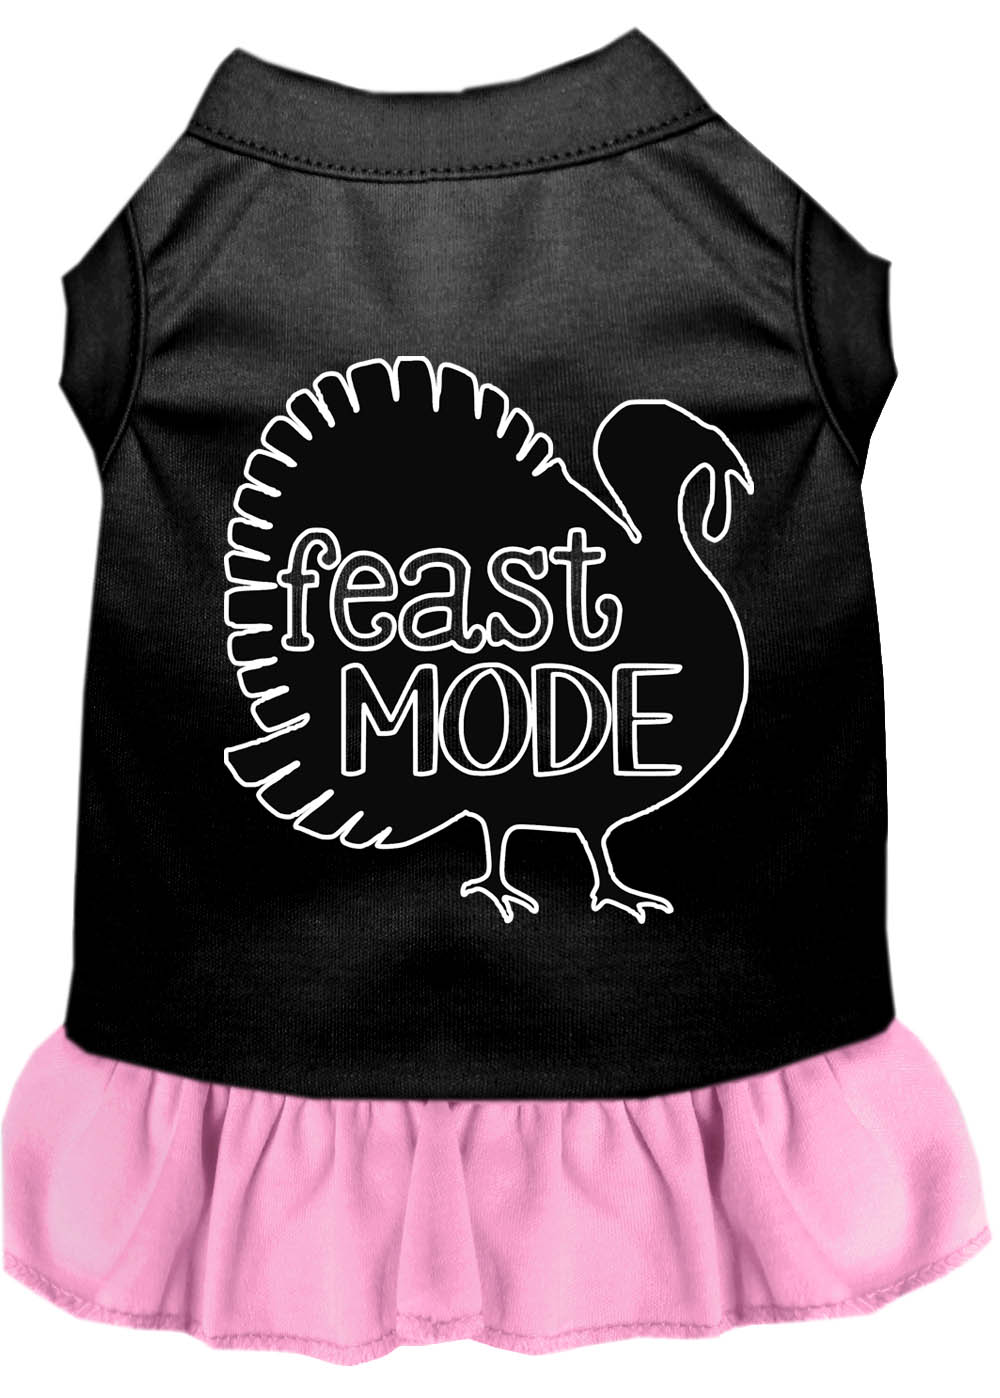 Feast Mode Screen Print Dog Dress Black with Light Pink Med